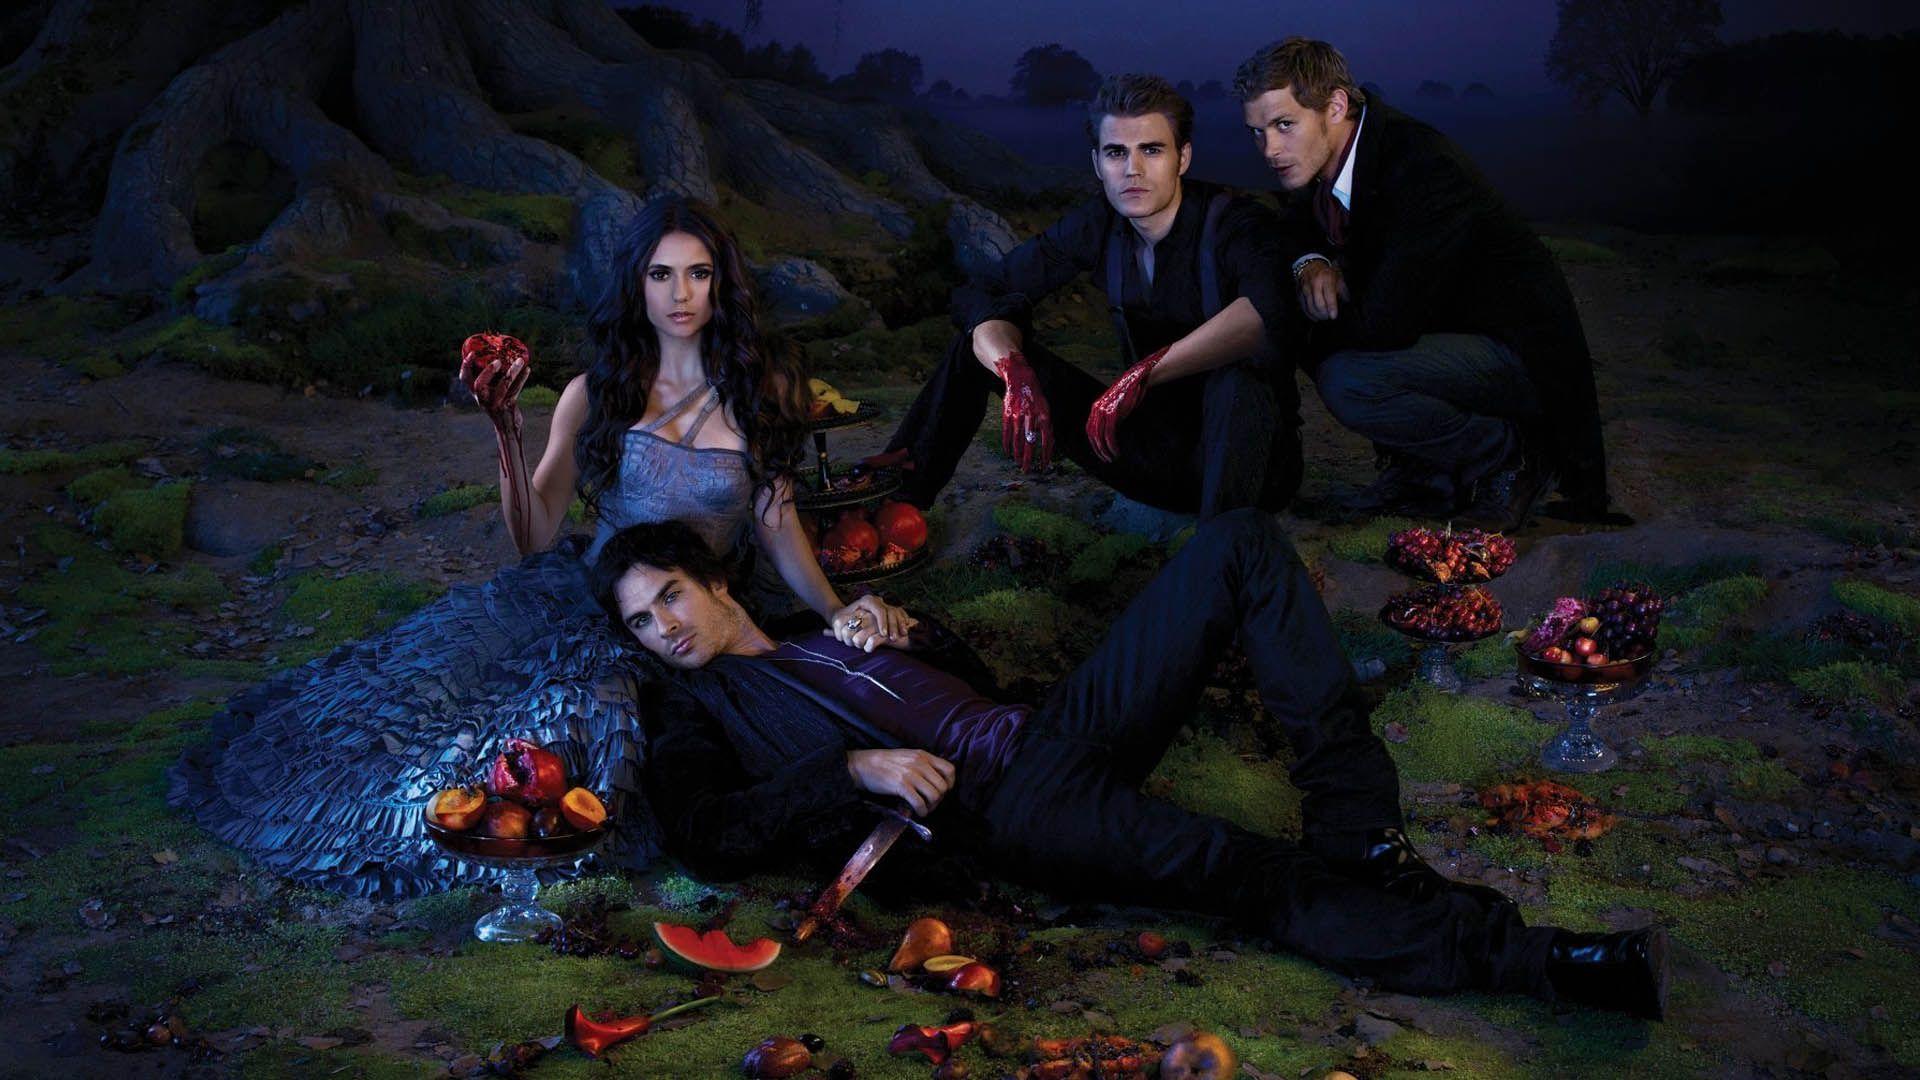 The Vampire Diaries Wallpaper Awesome Photo du32qj2